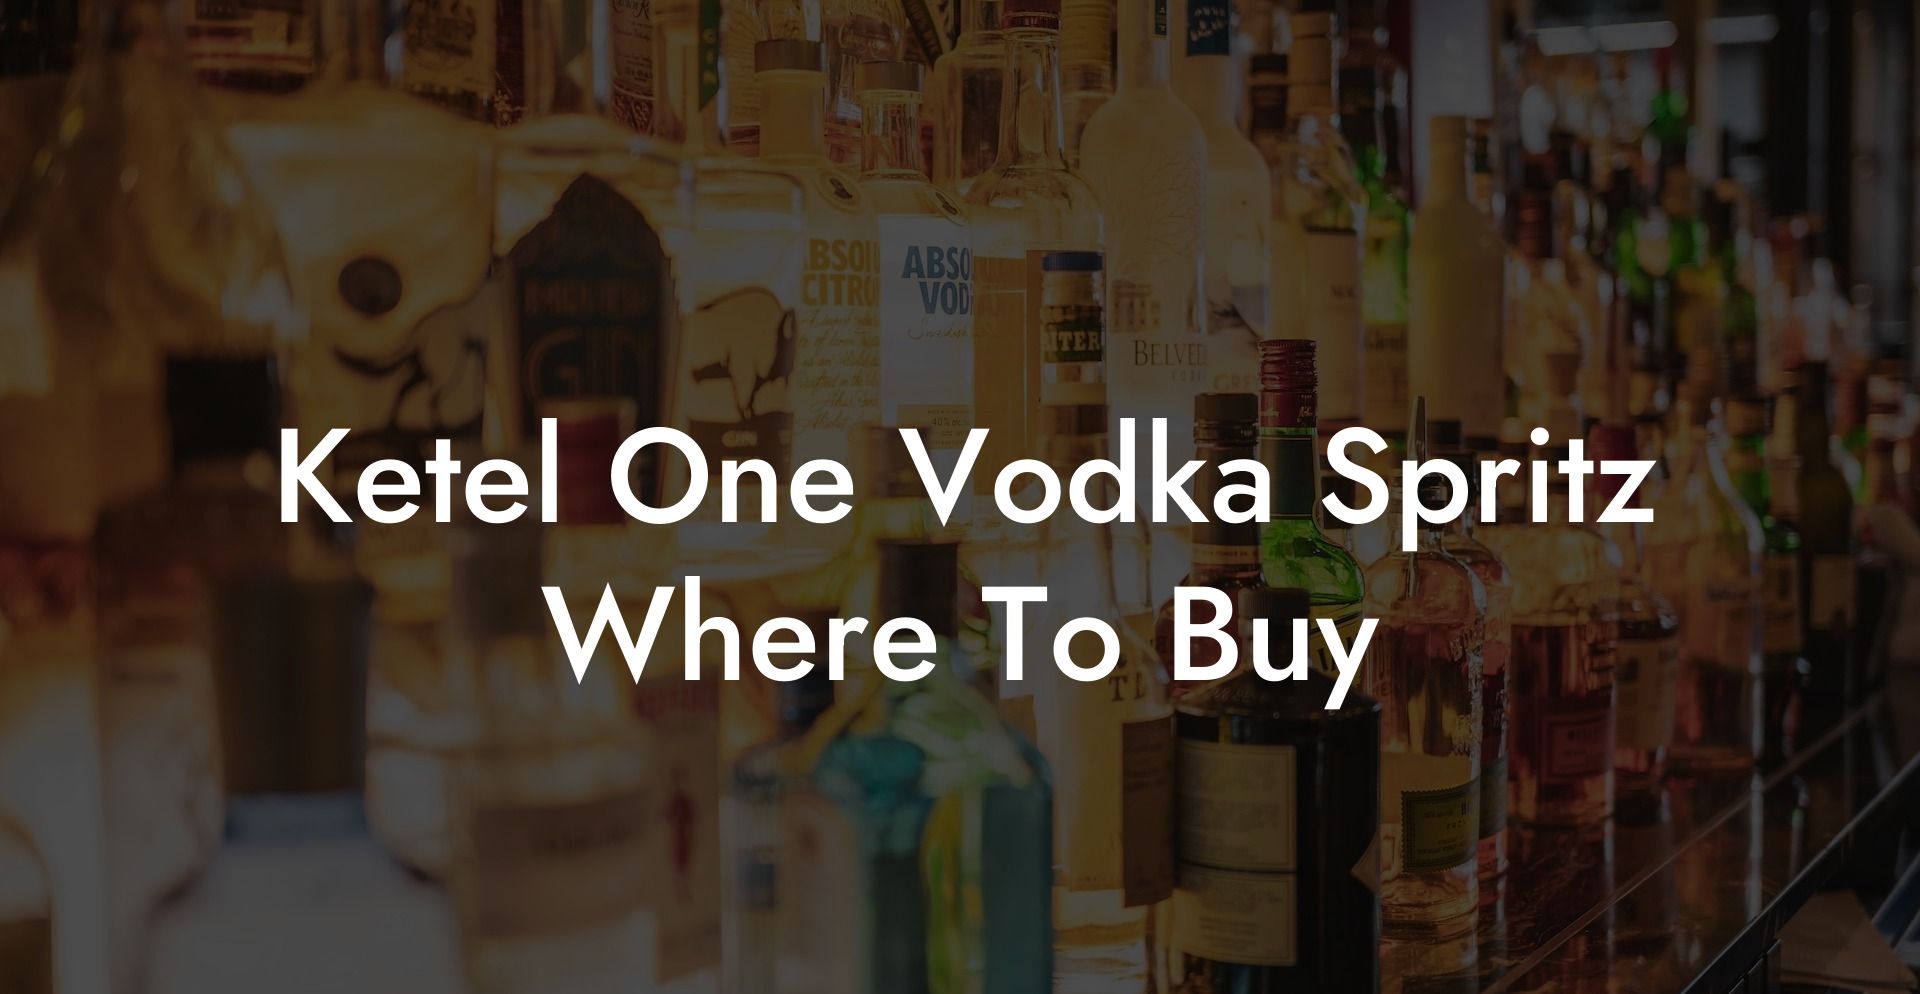 Ketel One Vodka Spritz Where To Buy